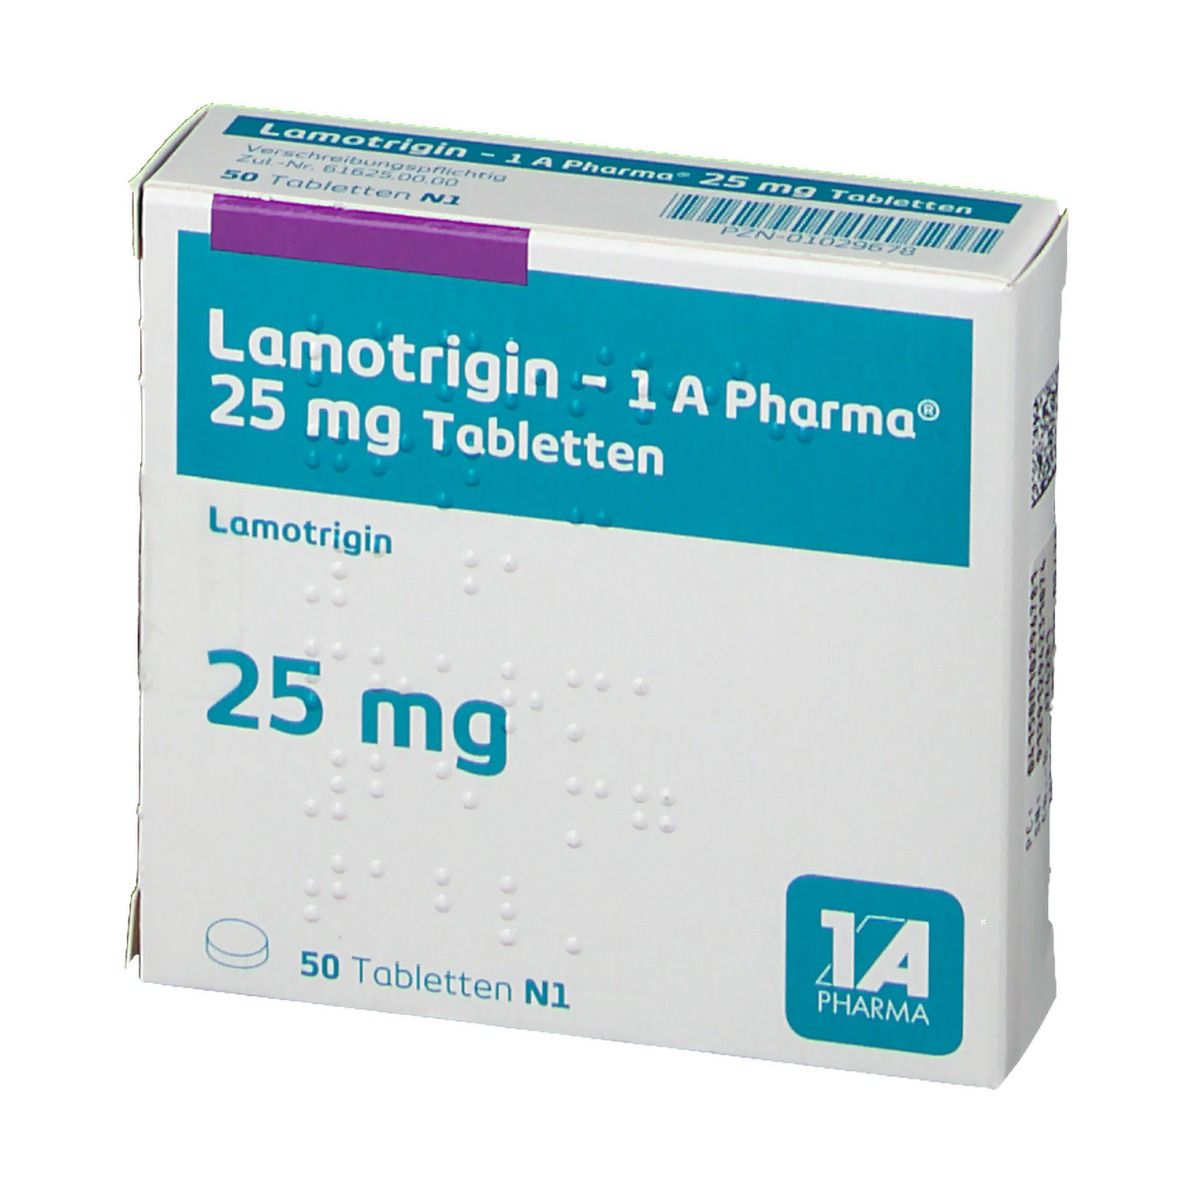 Lamotrigin - 1 A Pharma® 25 mg